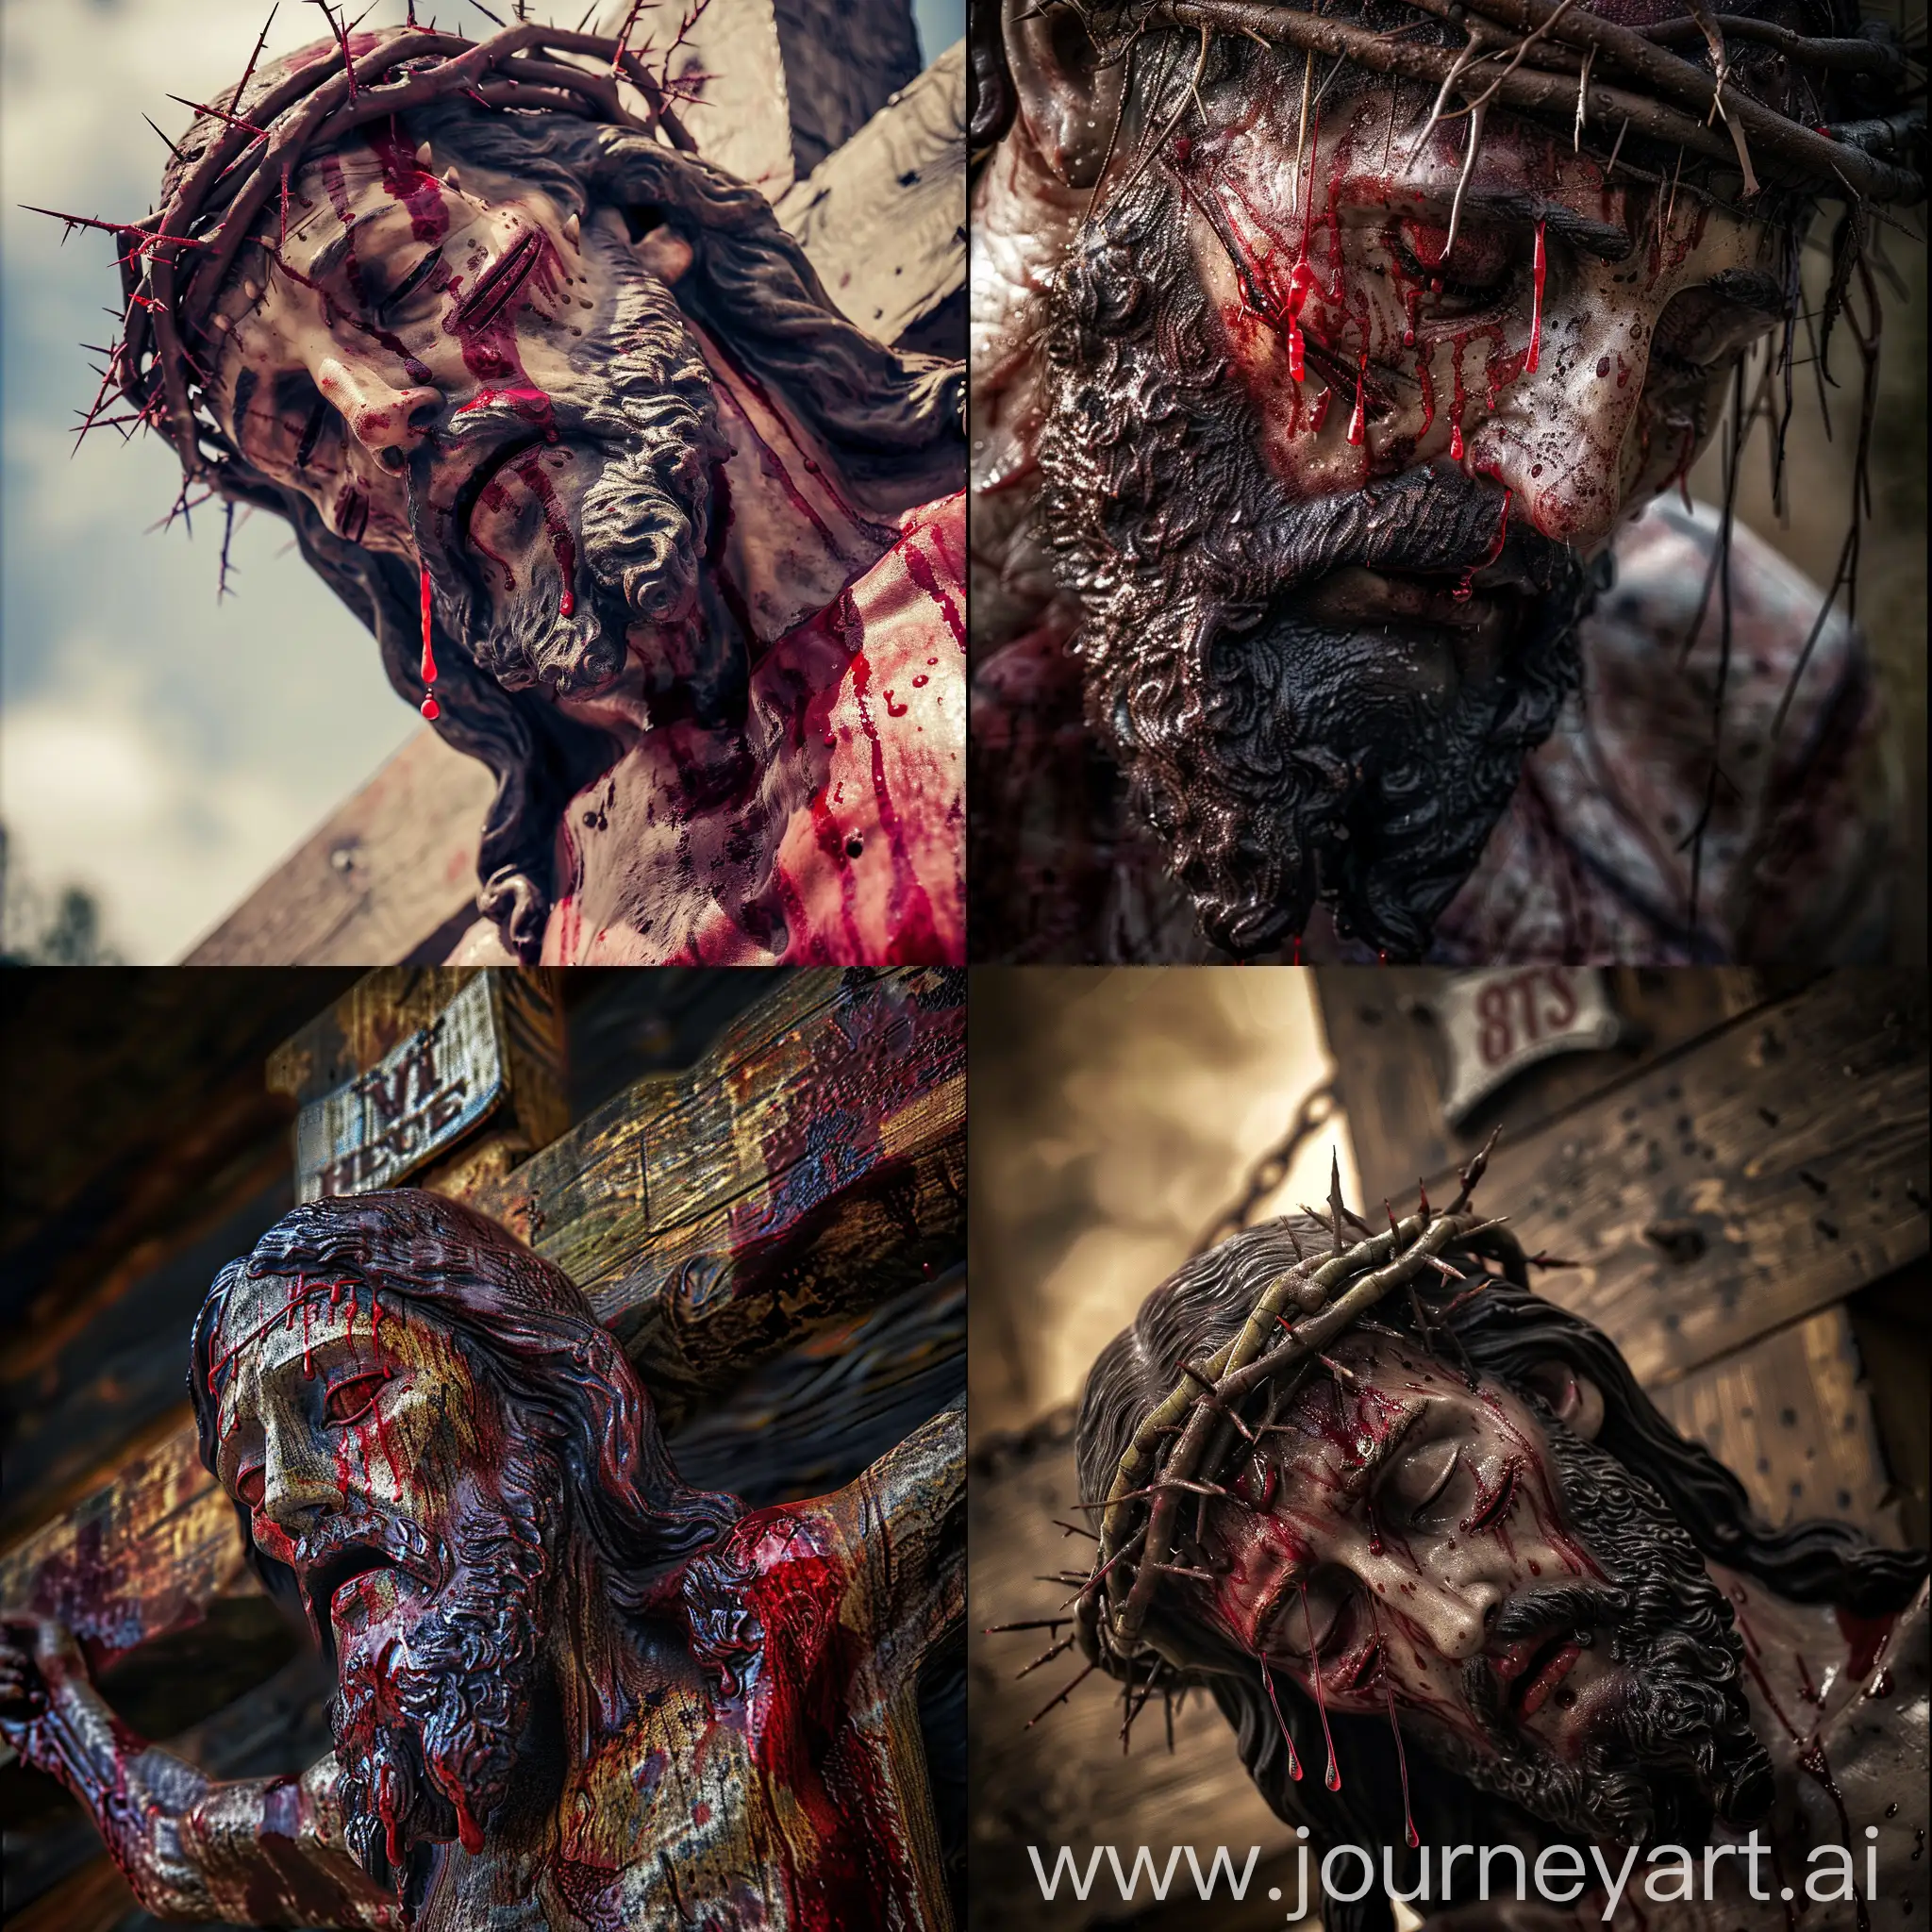 Sorrowful-Jesus-Crucifixion-Scene-Realistic-HDR-UltraWide-8K-Quality-Image